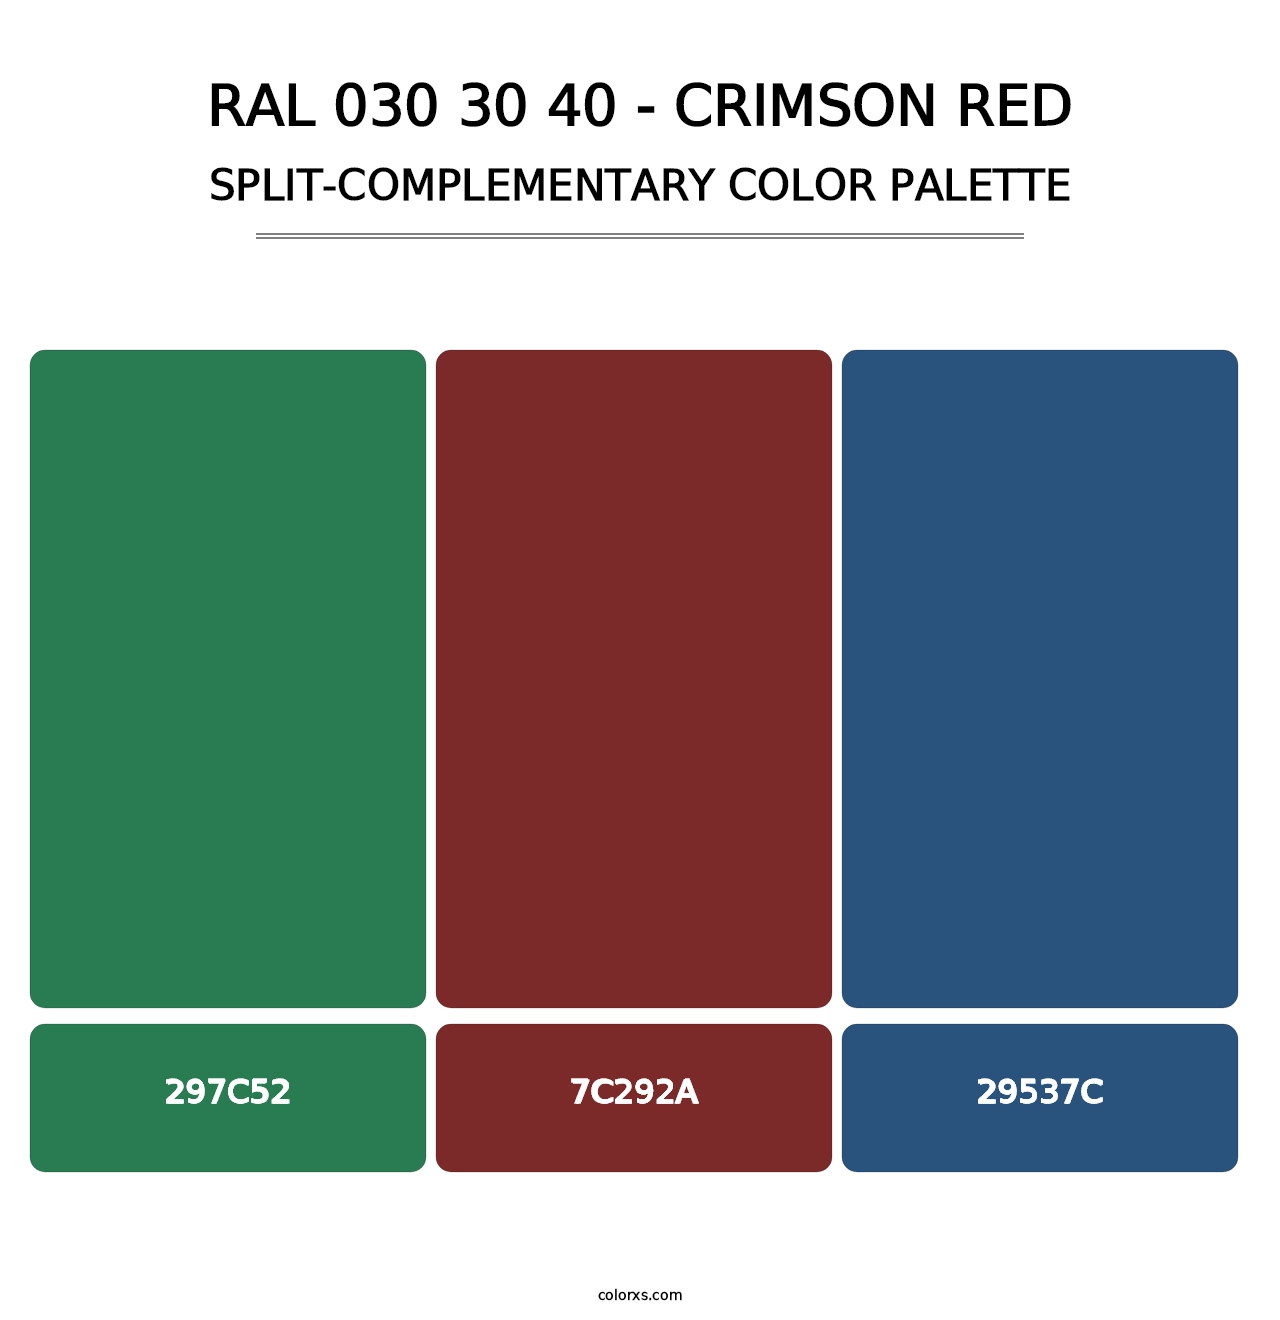 RAL 030 30 40 - Crimson Red - Split-Complementary Color Palette